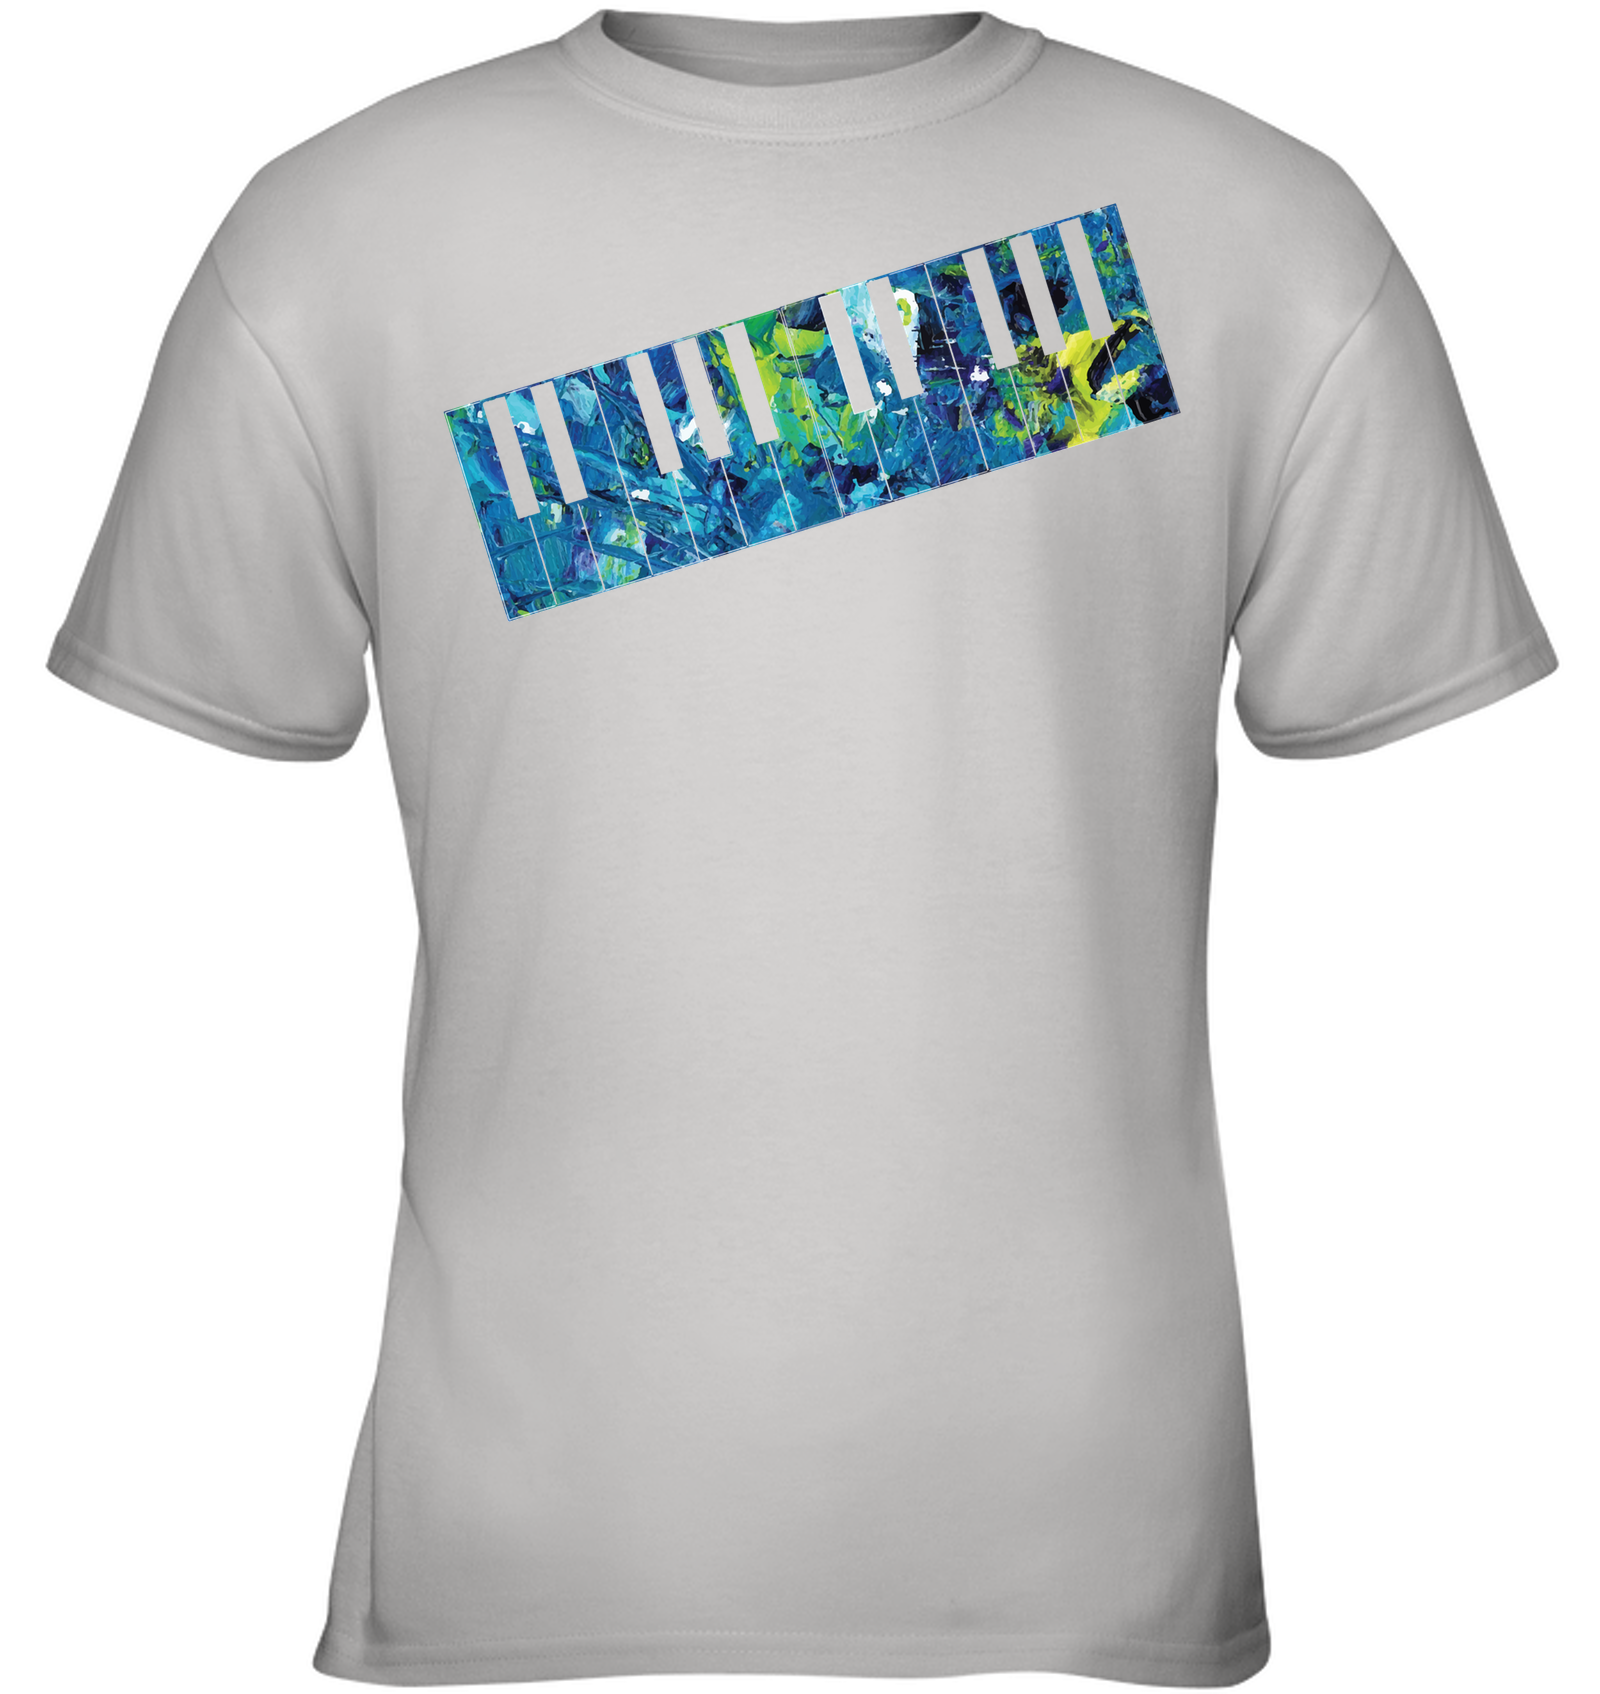 Keyboard Art - Gildan Youth Short Sleeve T-Shirt